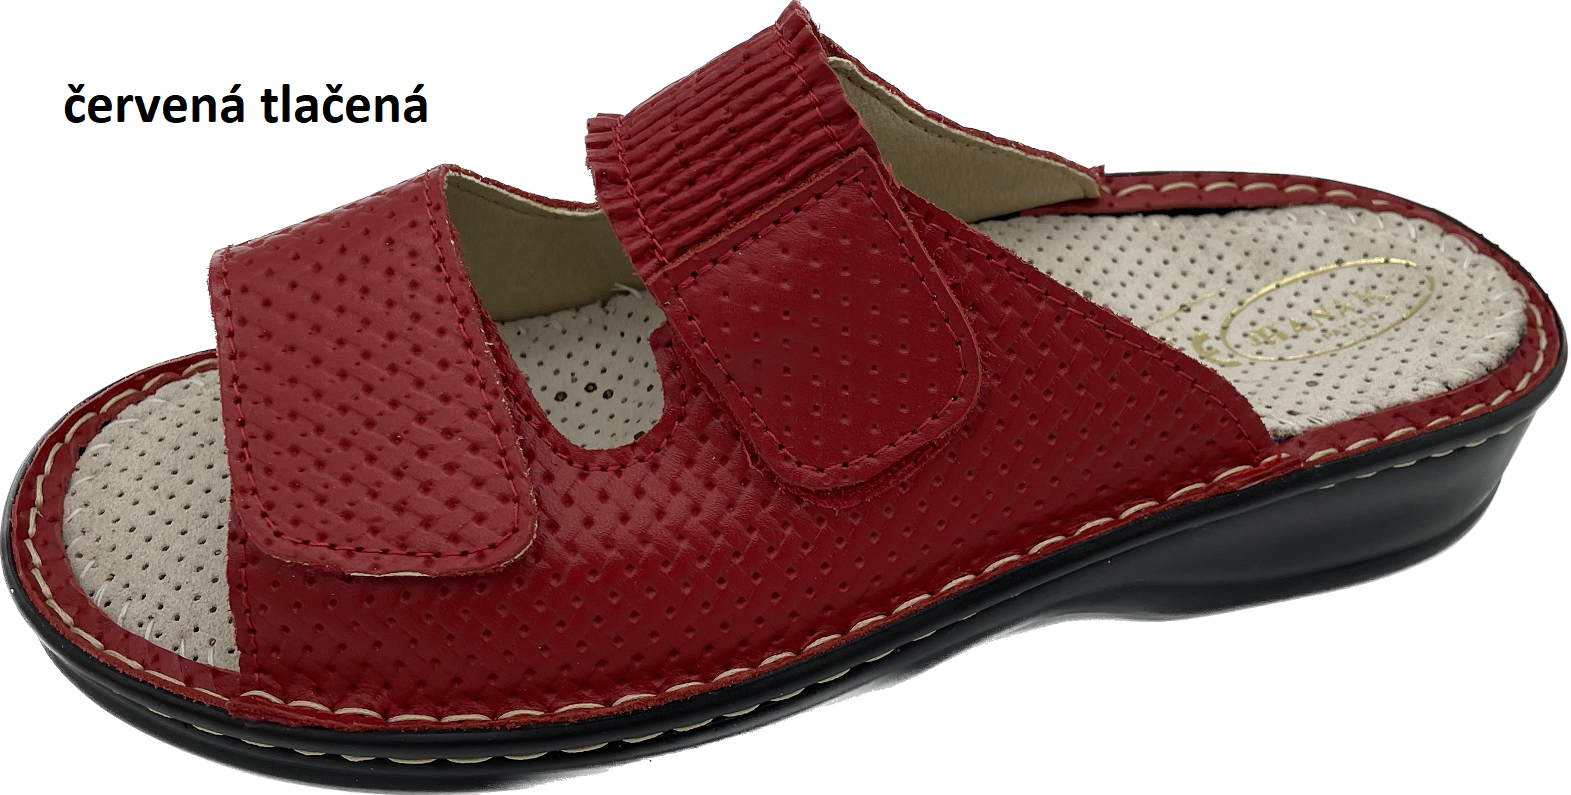 Boty Hanák vzor 304 - černá podešev Barva usně: červená tlačená, Velikosti obuvi: 36